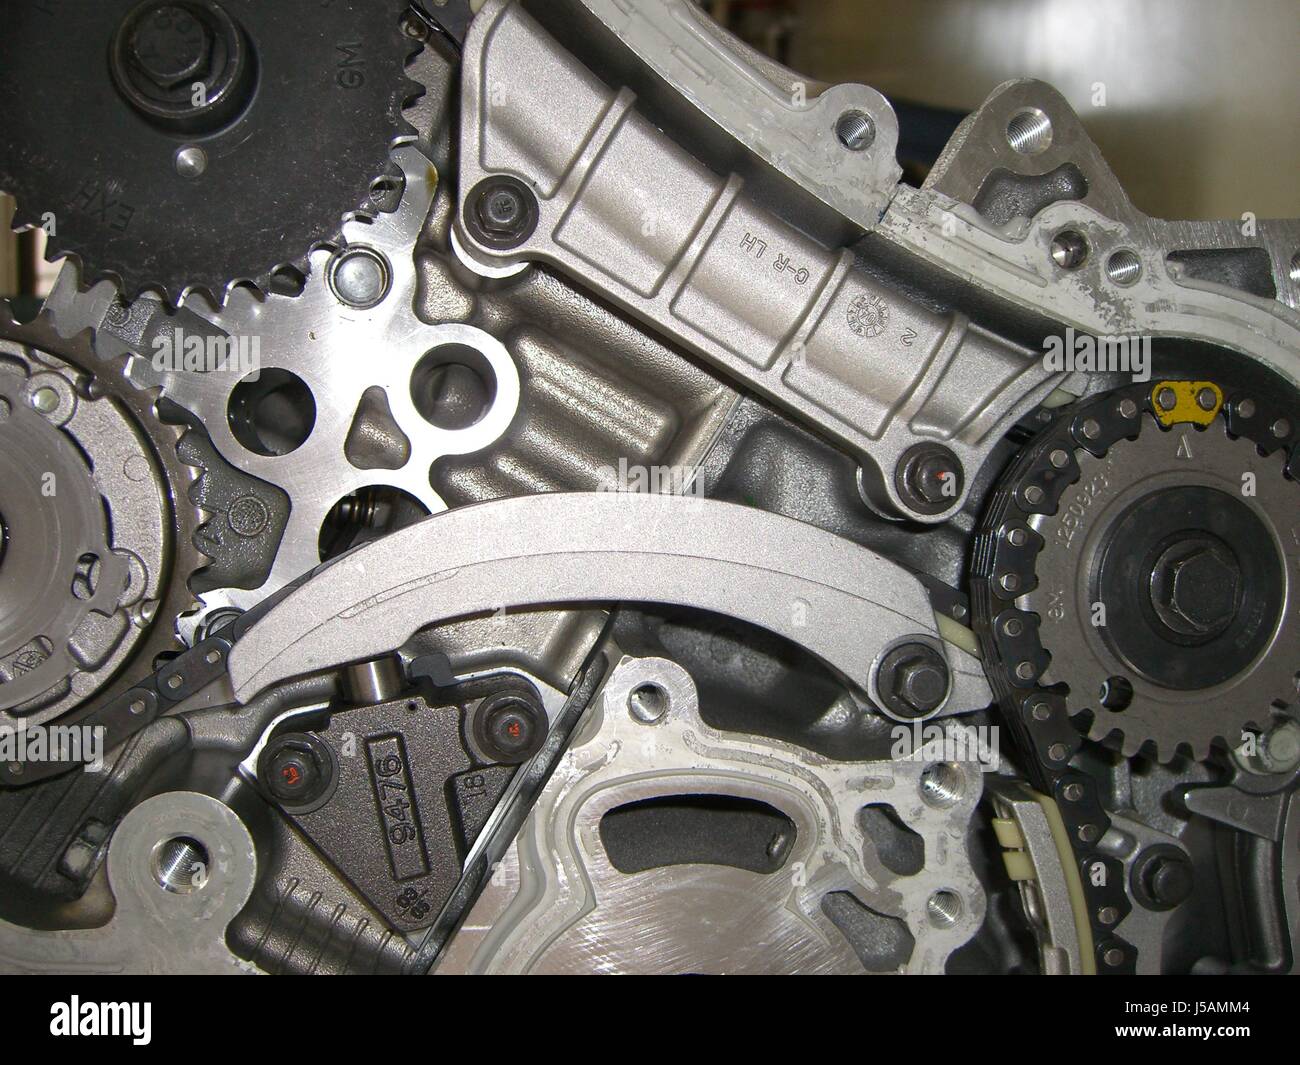 engineering engine drive motor chain screw gear wheels aluminum aluminium  Stock Photo - Alamy